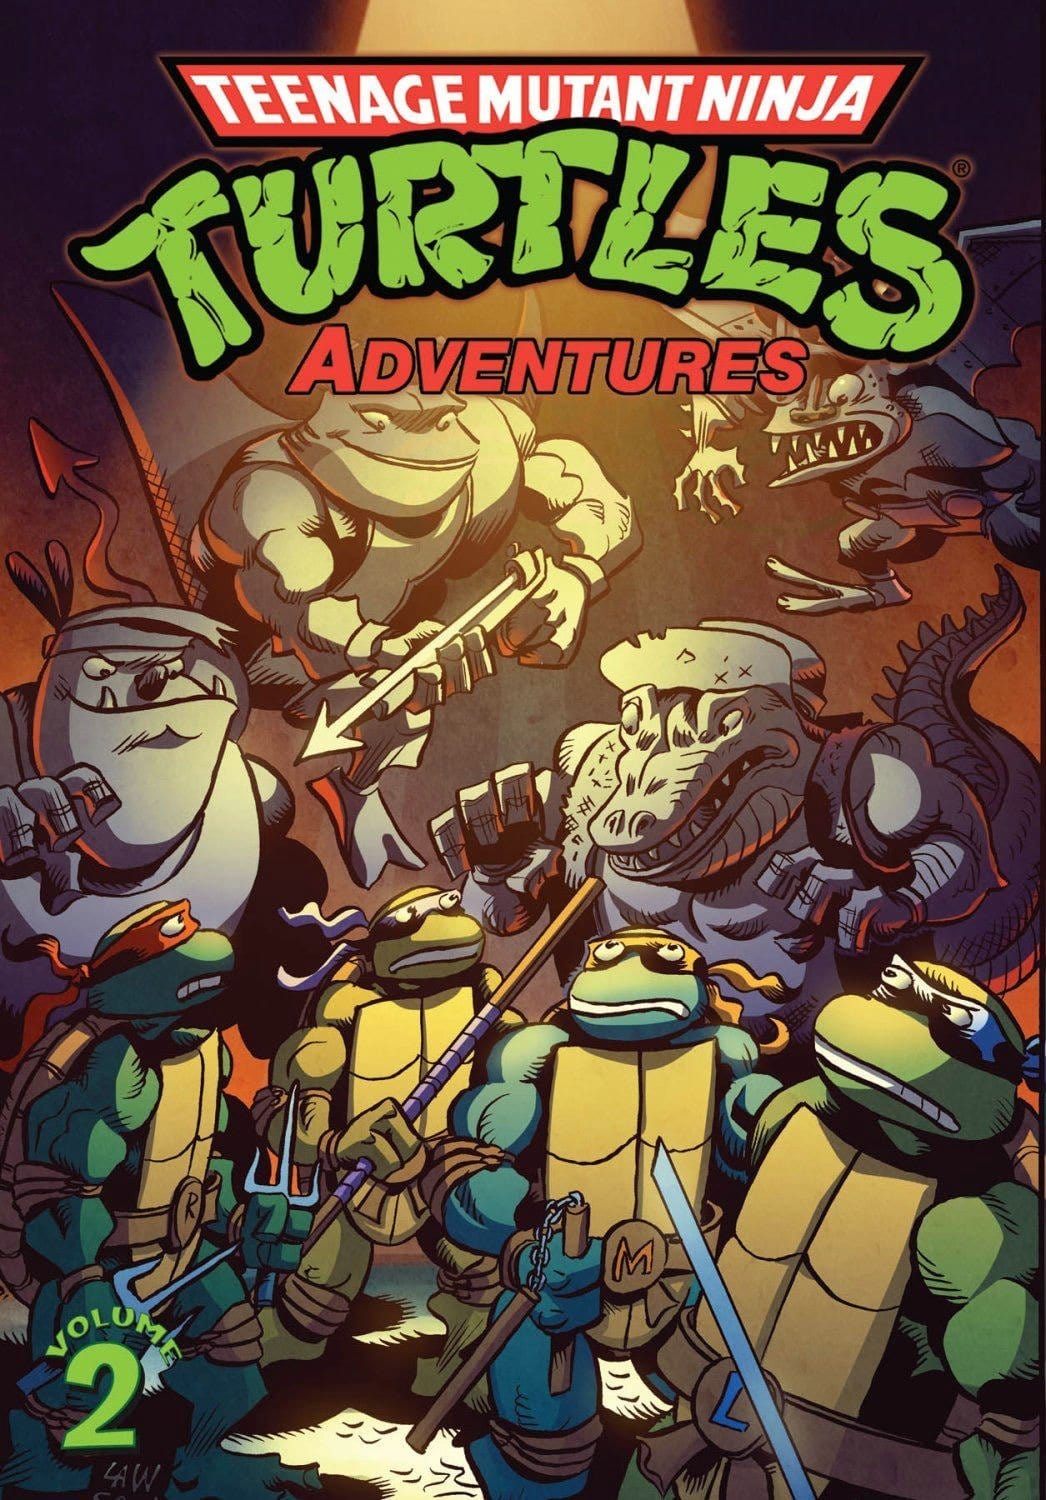 Teenage Mutant Ninja Turtles: Adventures Vol. 2 TP - Third Eye